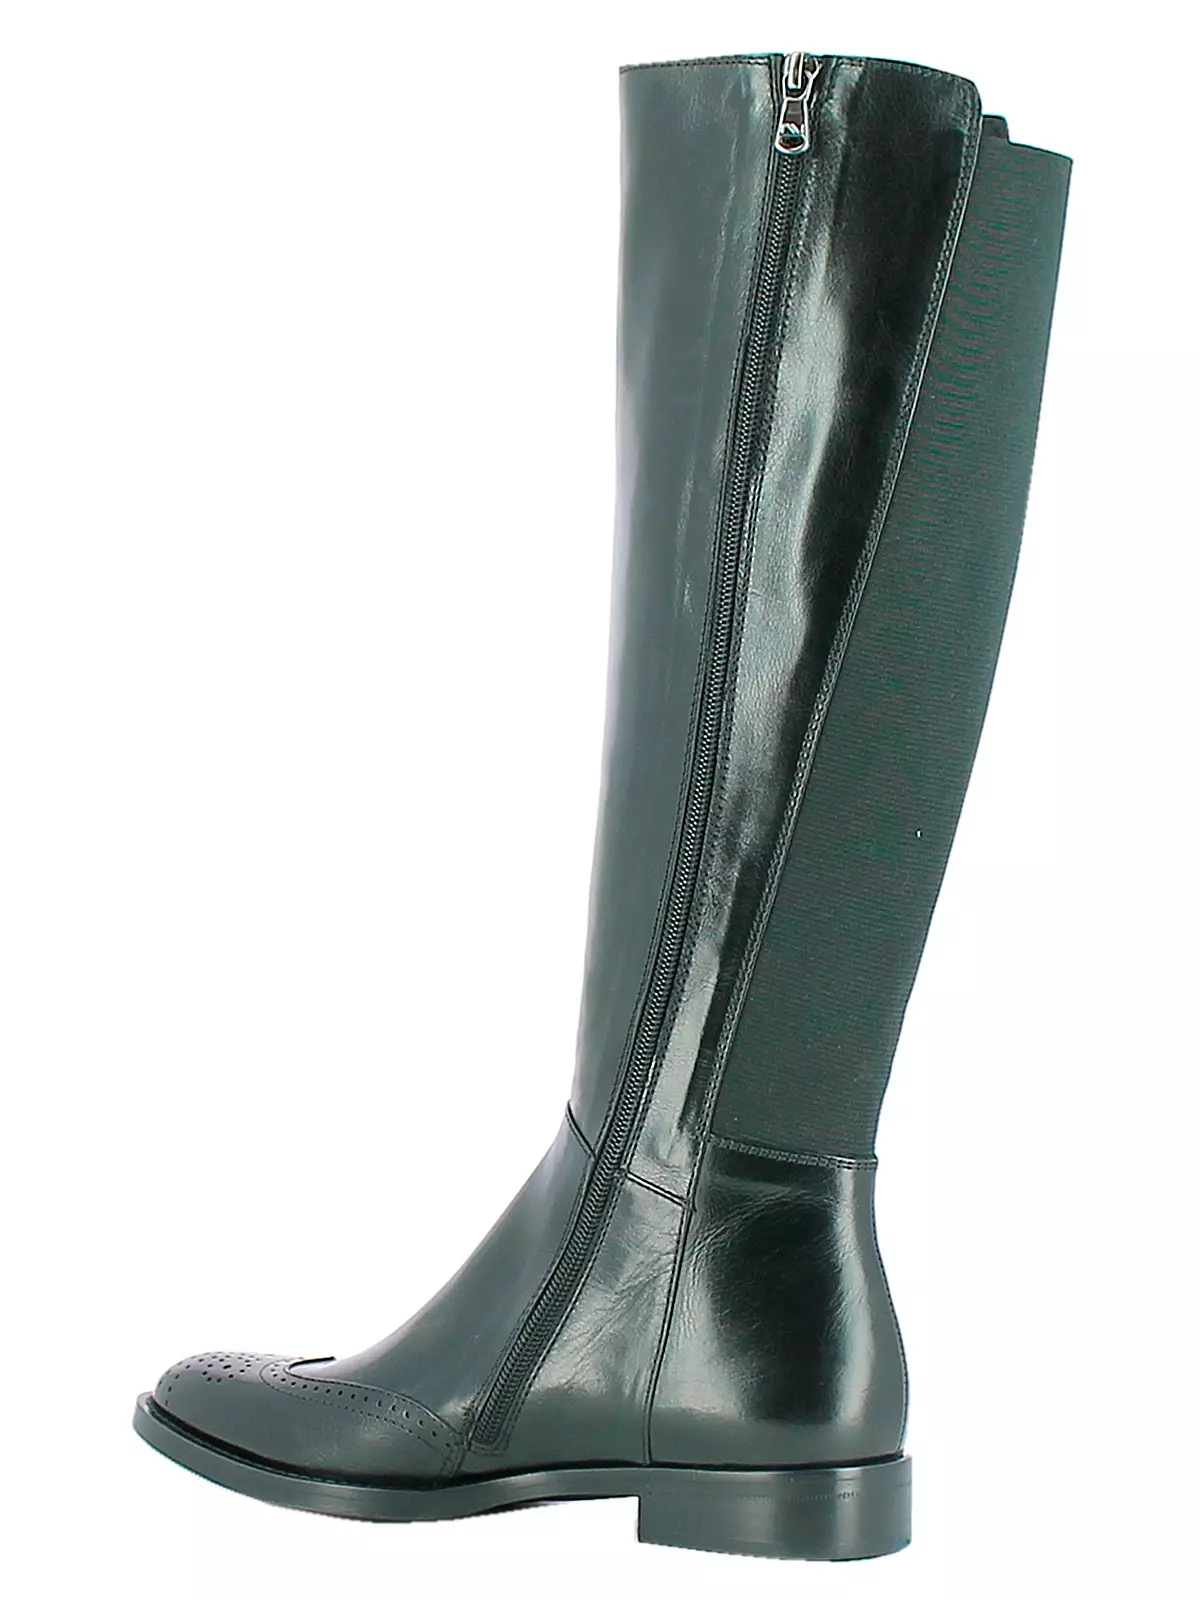 Boots Eurzima (55 φωτογραφίες): Τι σημαίνει, τα χειμερινά μοντέλα των γυναικών σε ένα ευρύ πόδι και μοντέρνες μπότες σε μια παχιά σόλα 2240_40